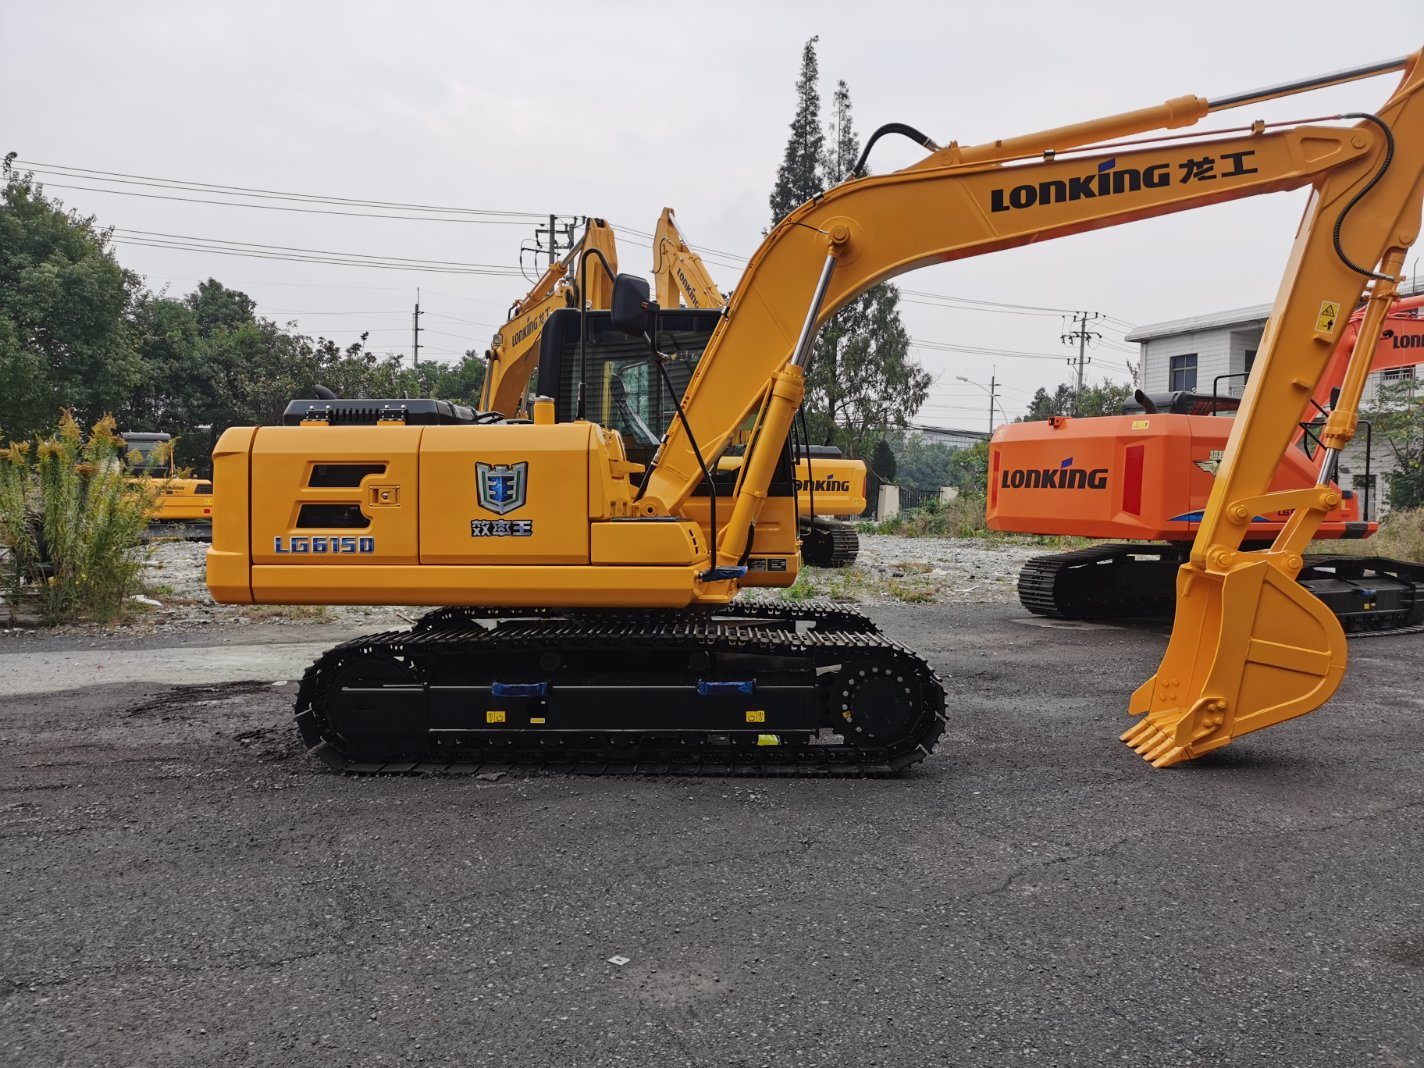 7.5 Ton Excavator Lonking Cdm6075